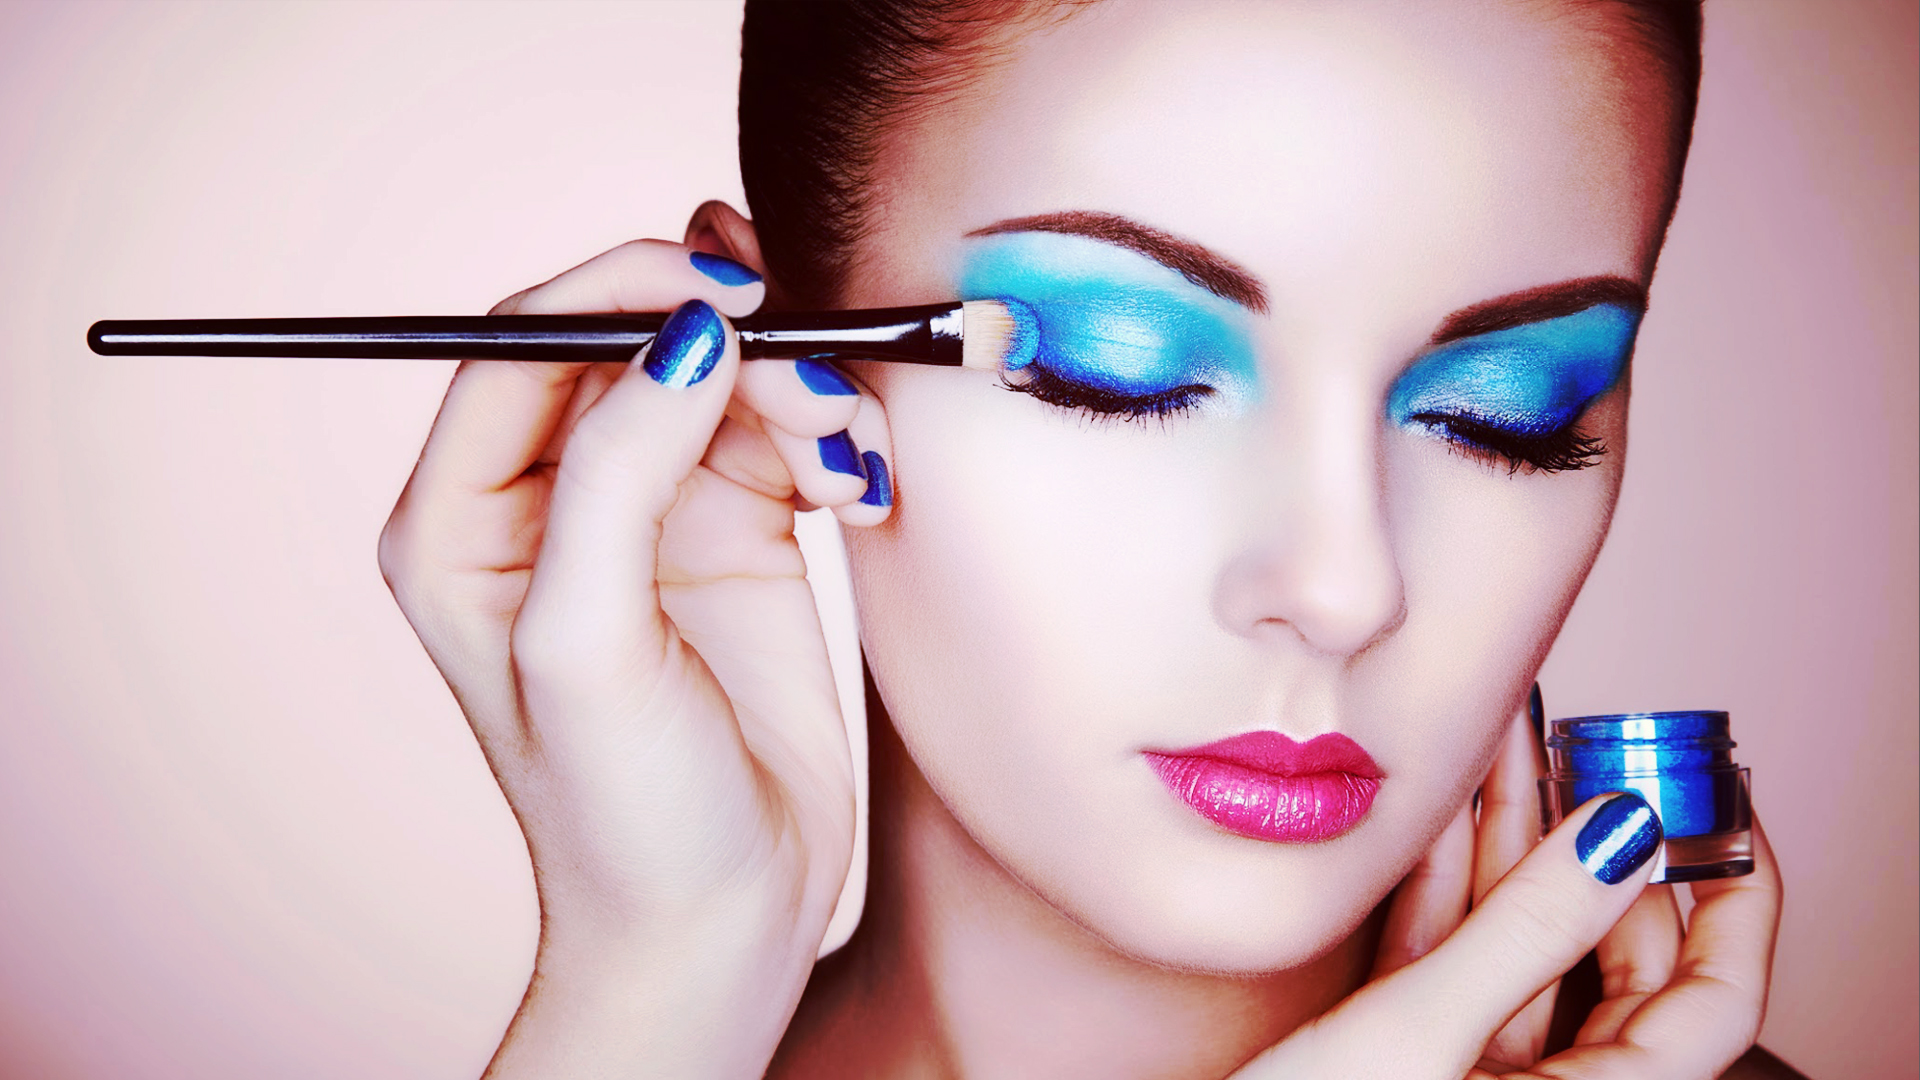 makeup wallpaper hd,face,eyebrow,eyelash,blue,eye shadow